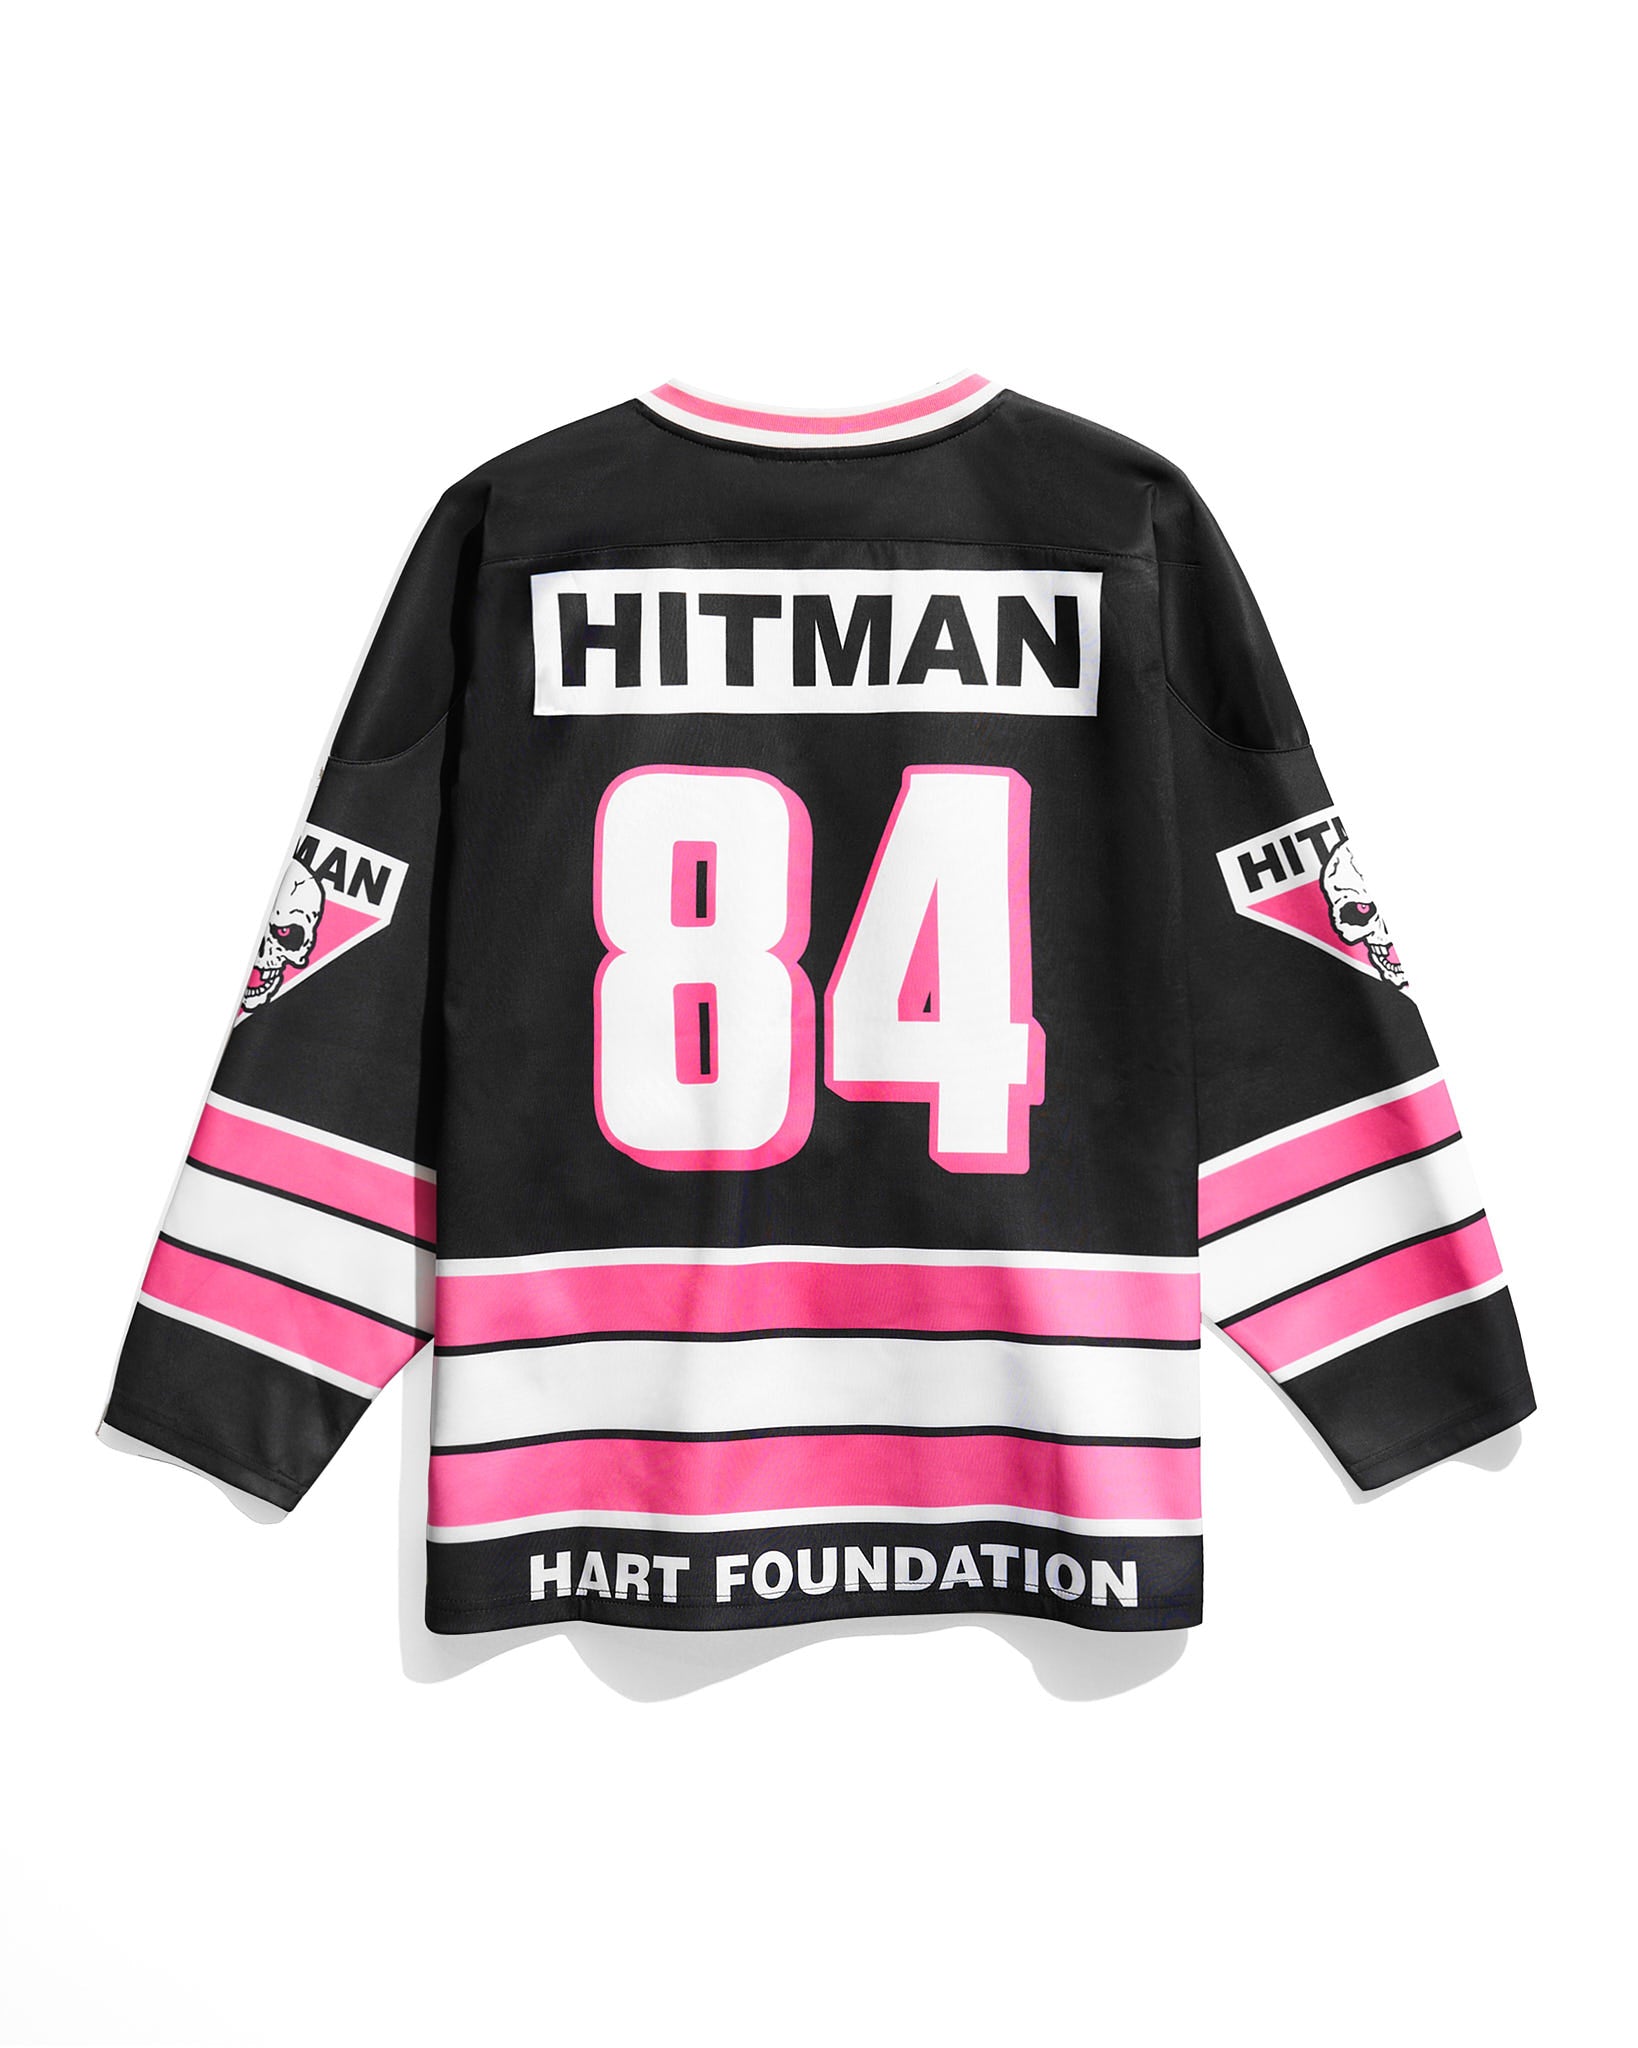 WCW Bret “Hitman” Hart Hockey Jersey